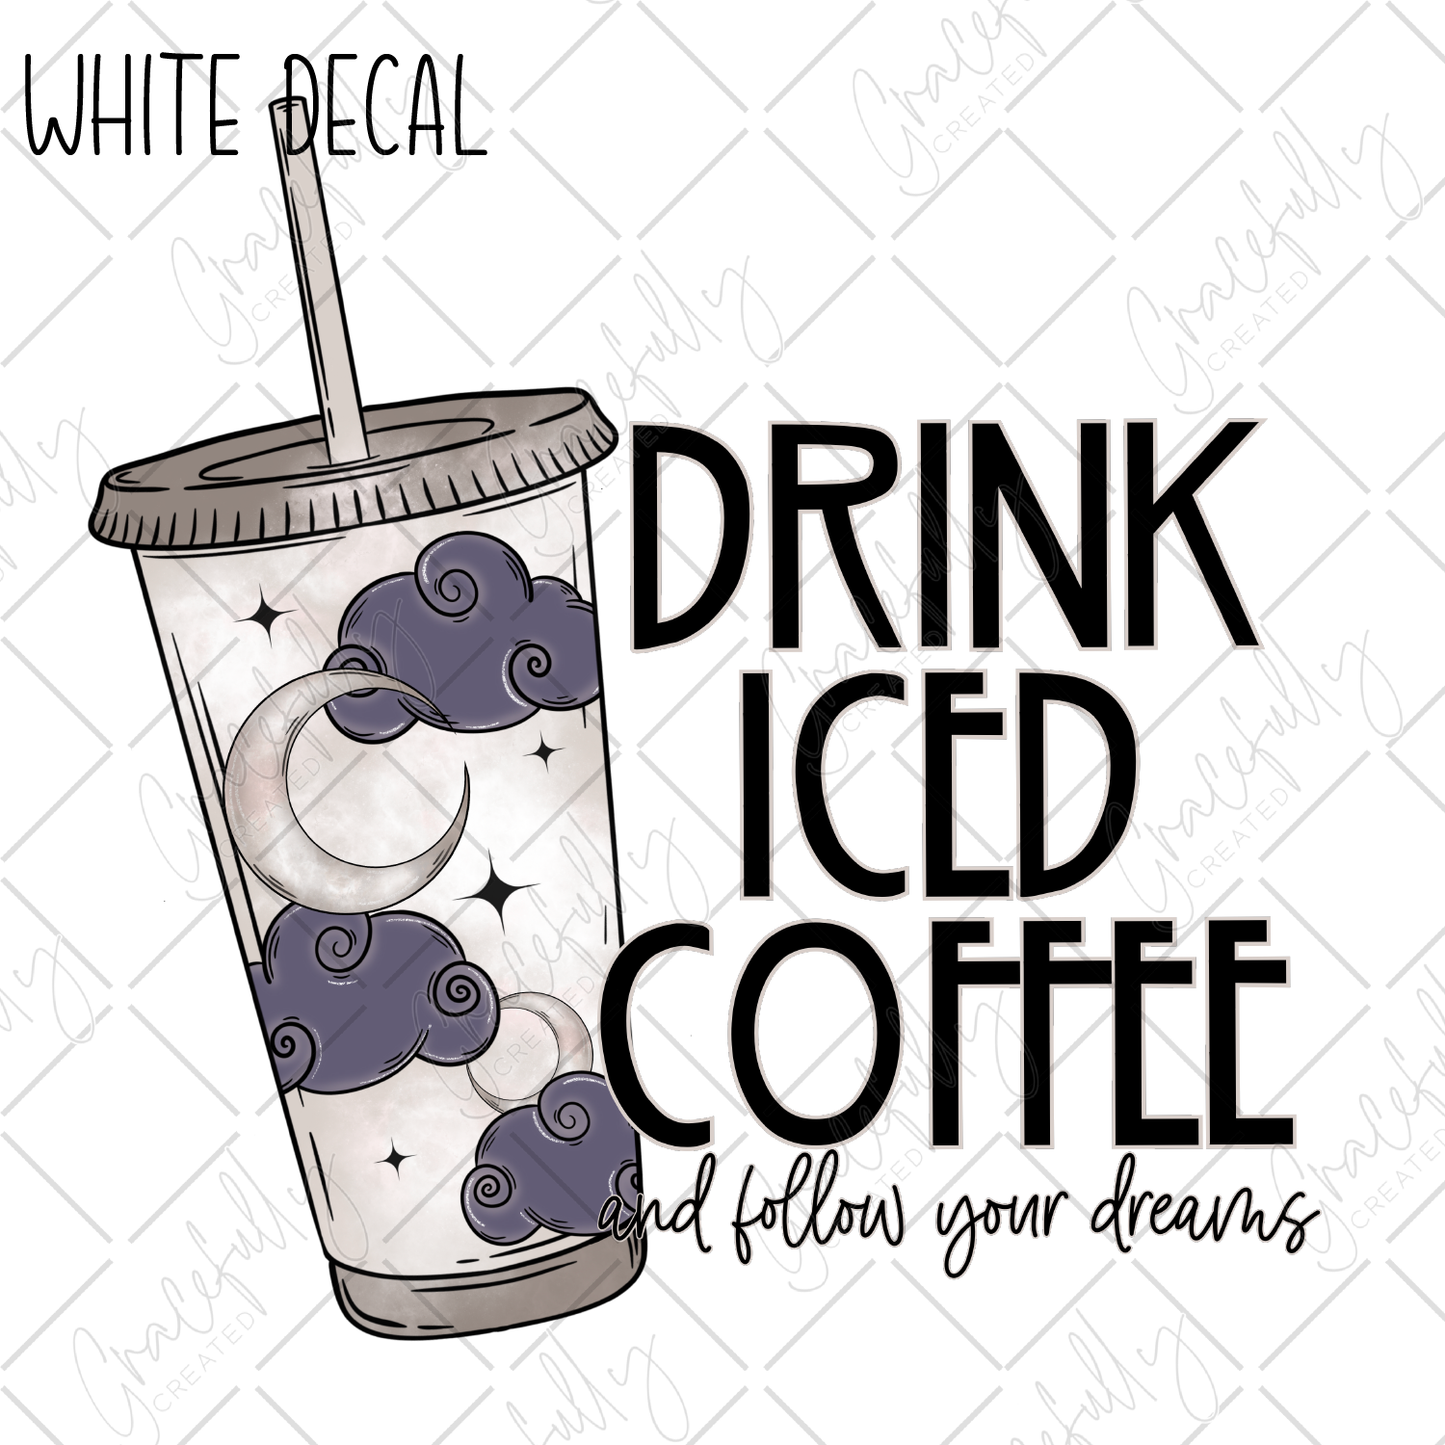 WD146 Iced Coffee Dreams